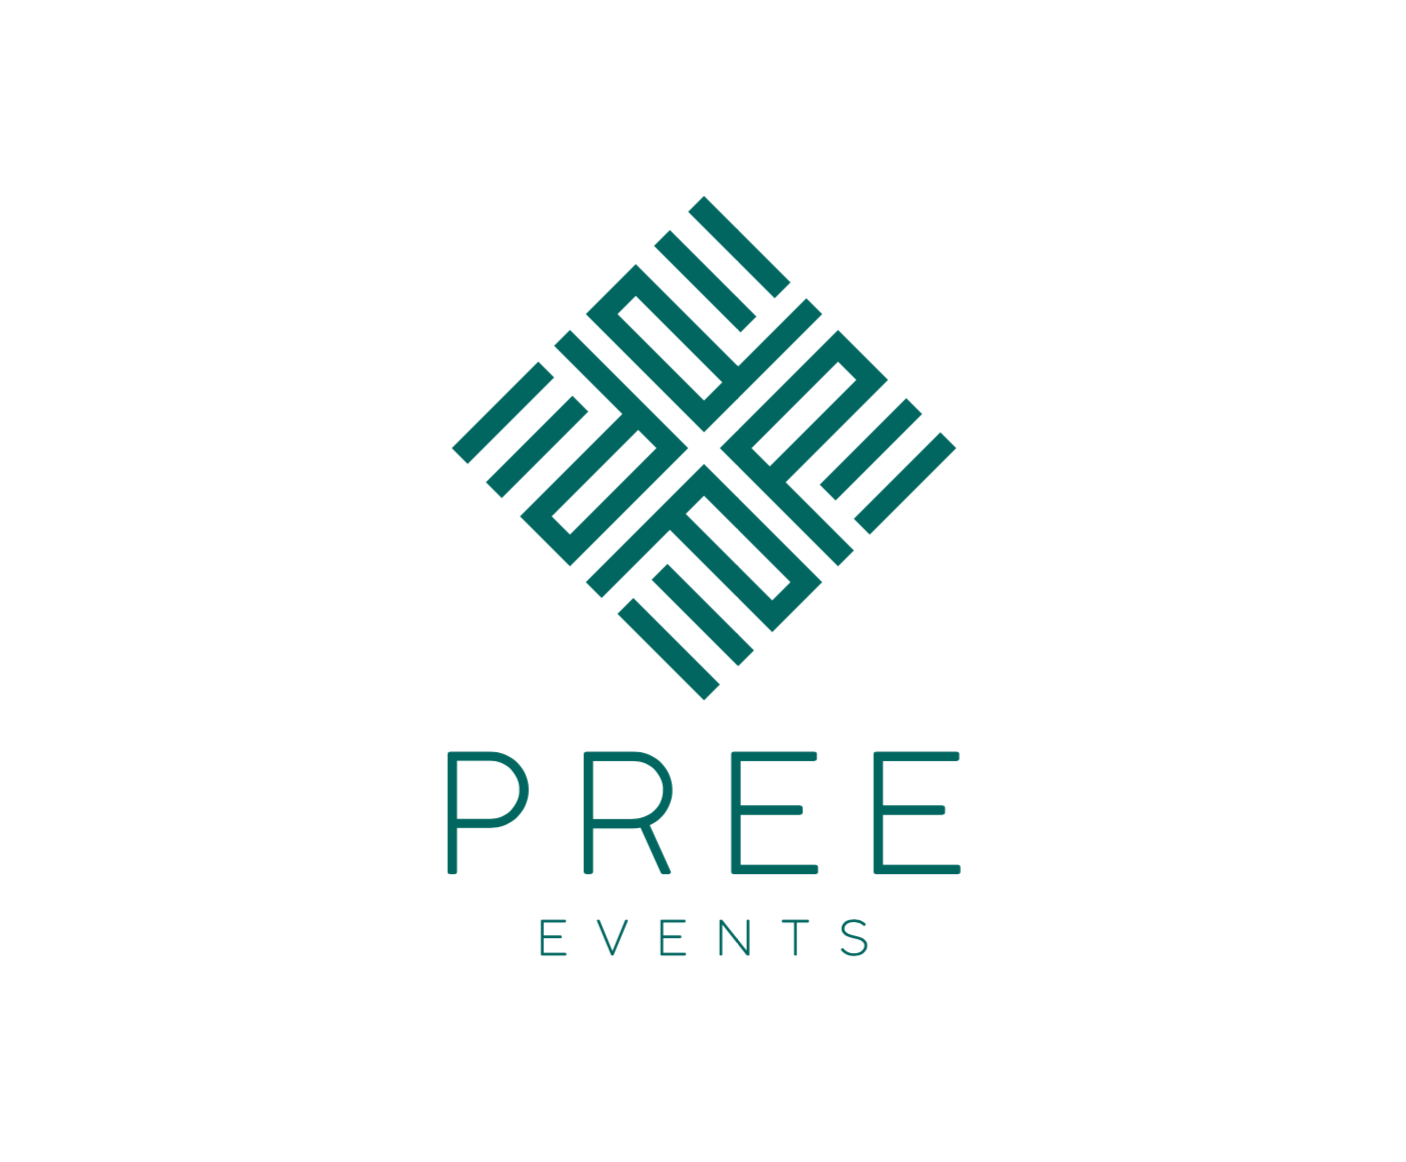 Pree events logo